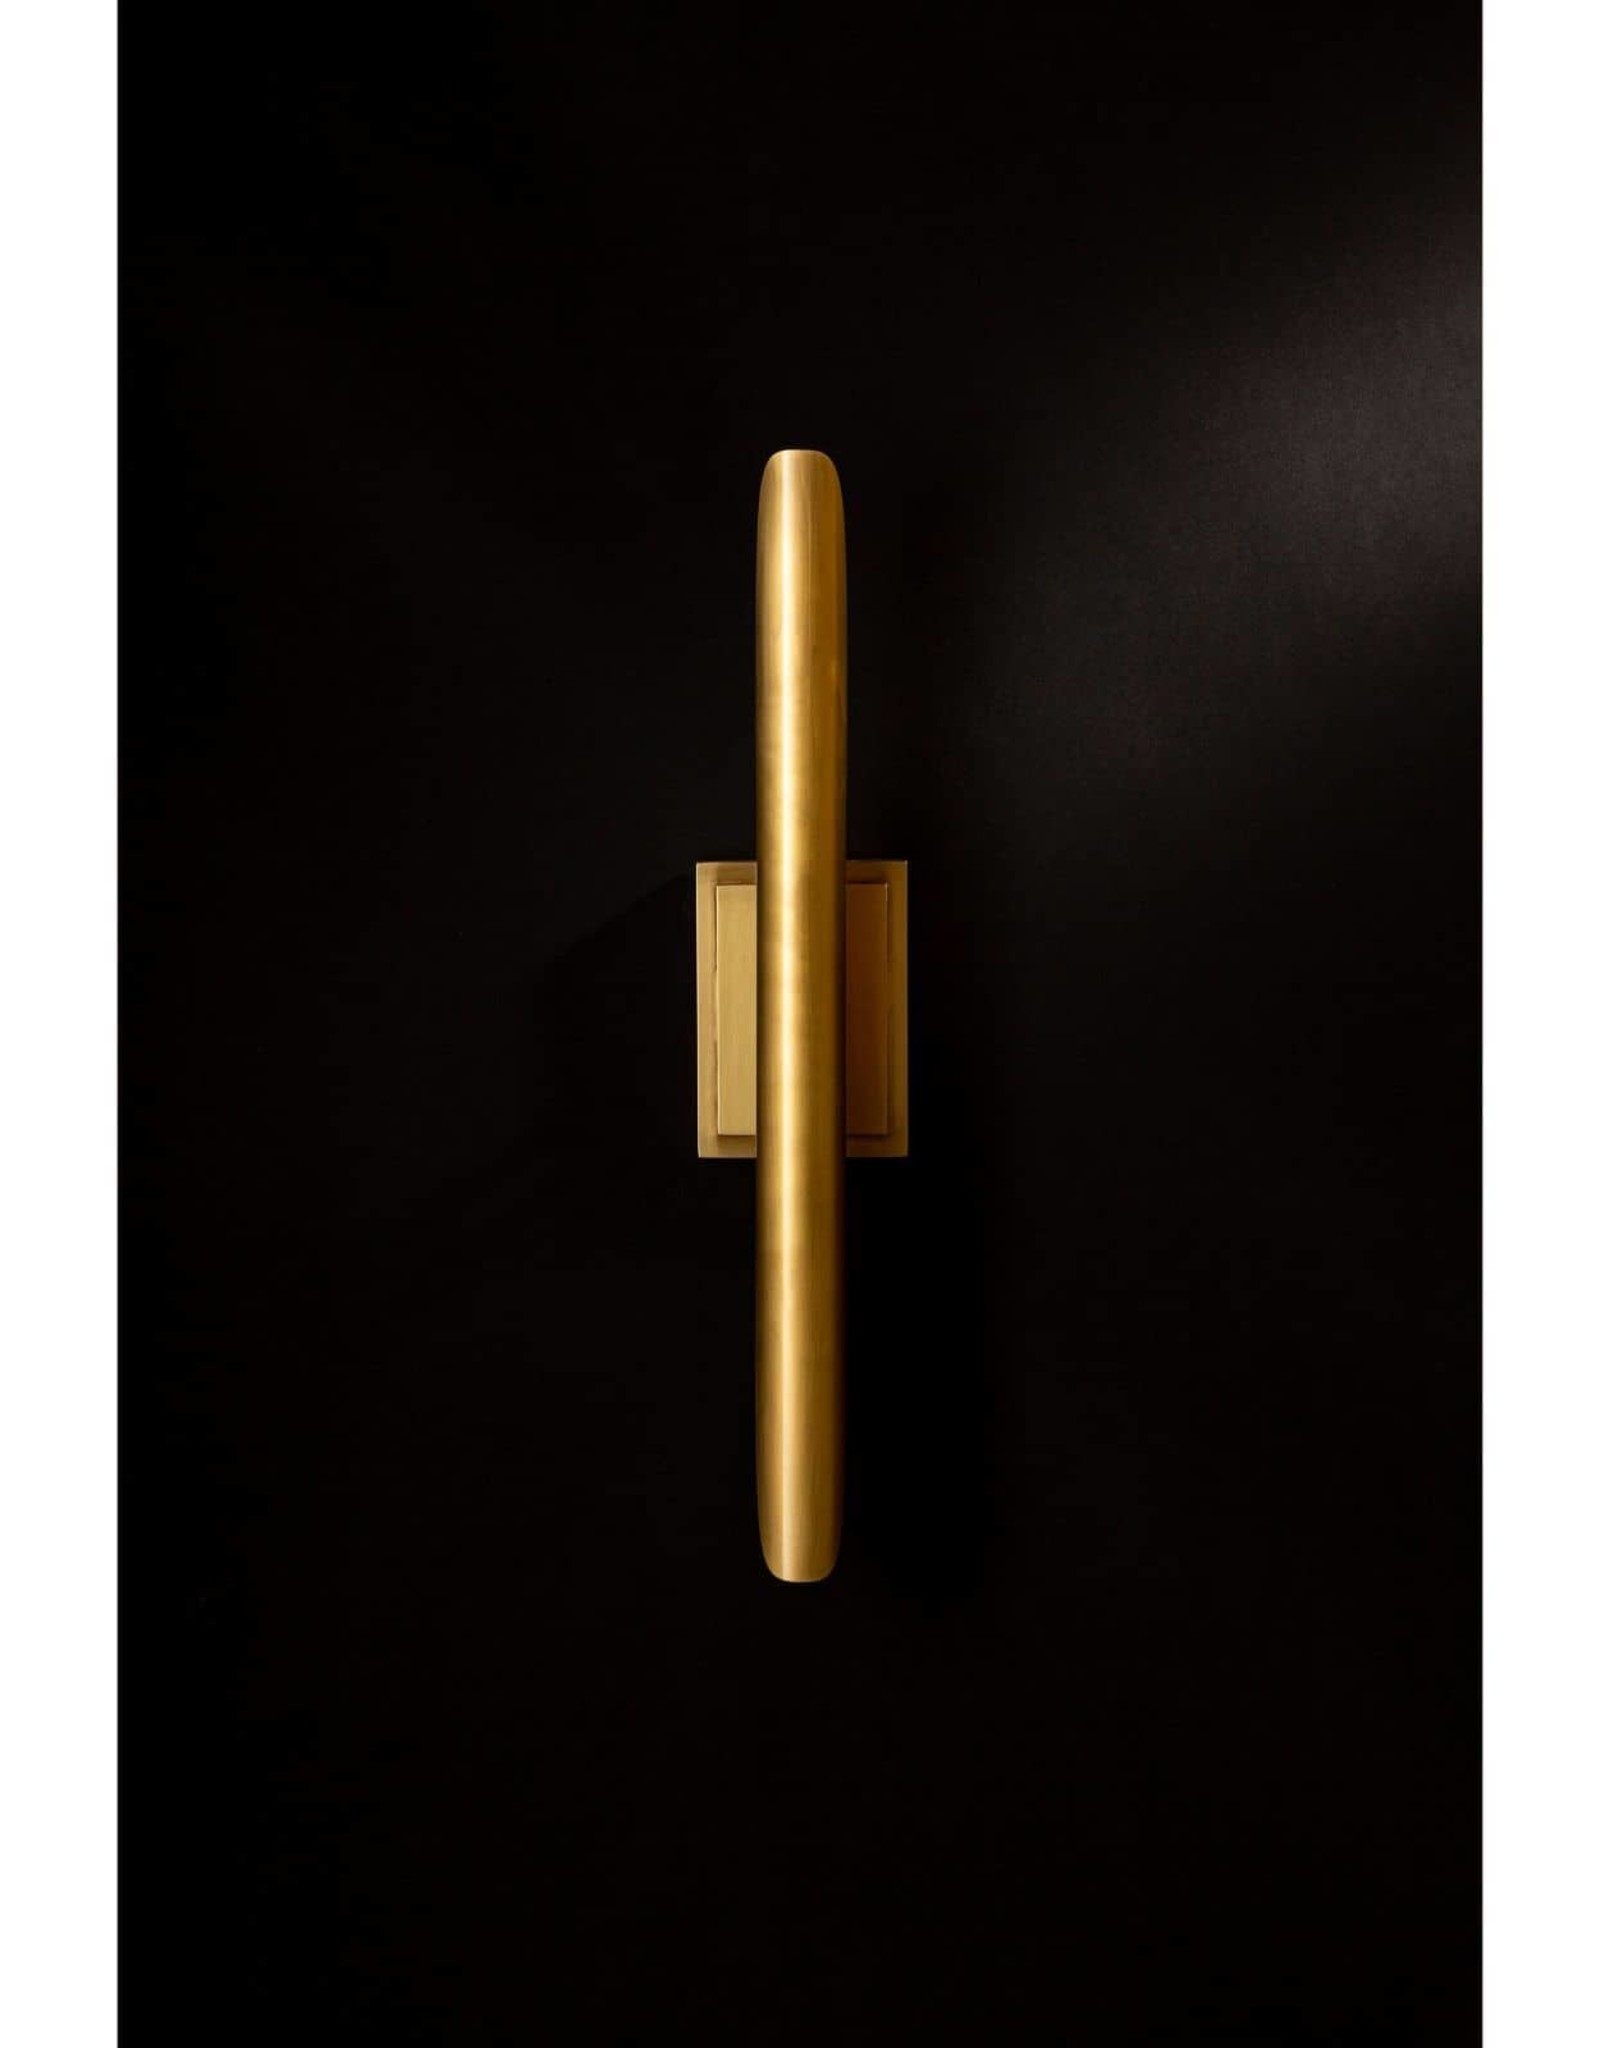 Regina Andrew Design Redford Sconce (Natural Brass)